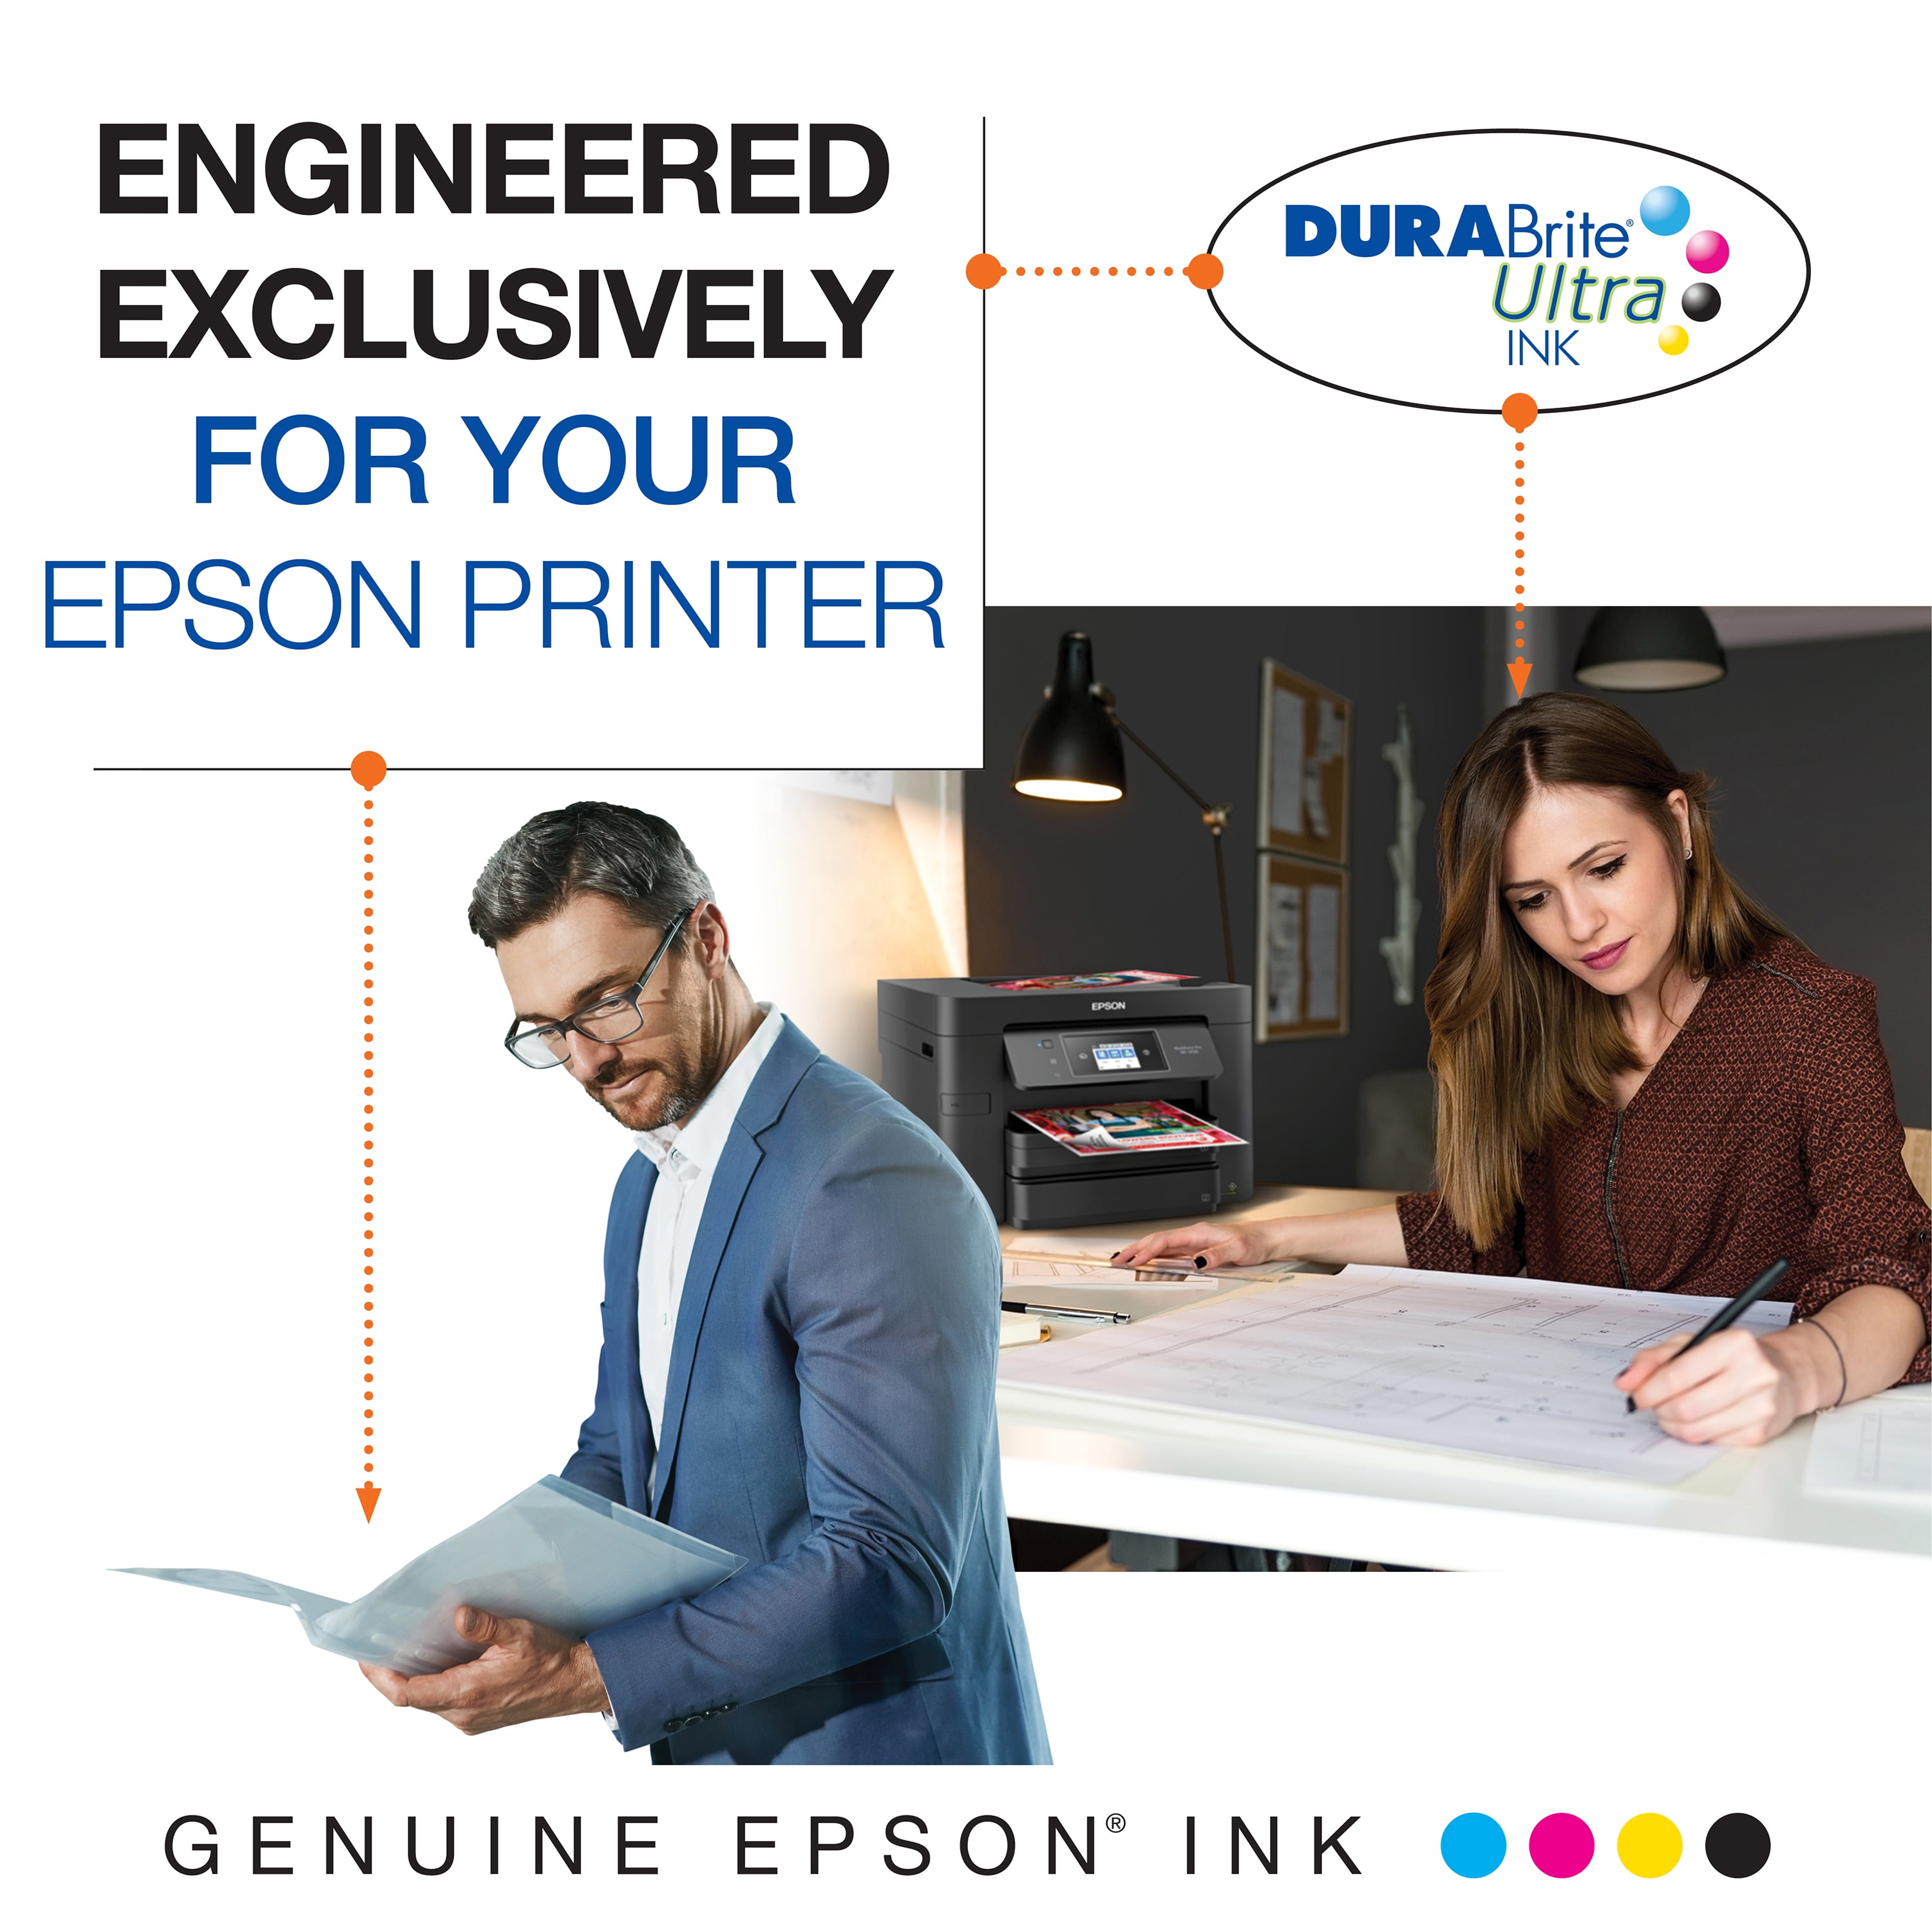 Epson 320P Standard Capacity Ink Cartridge + Photo Paper